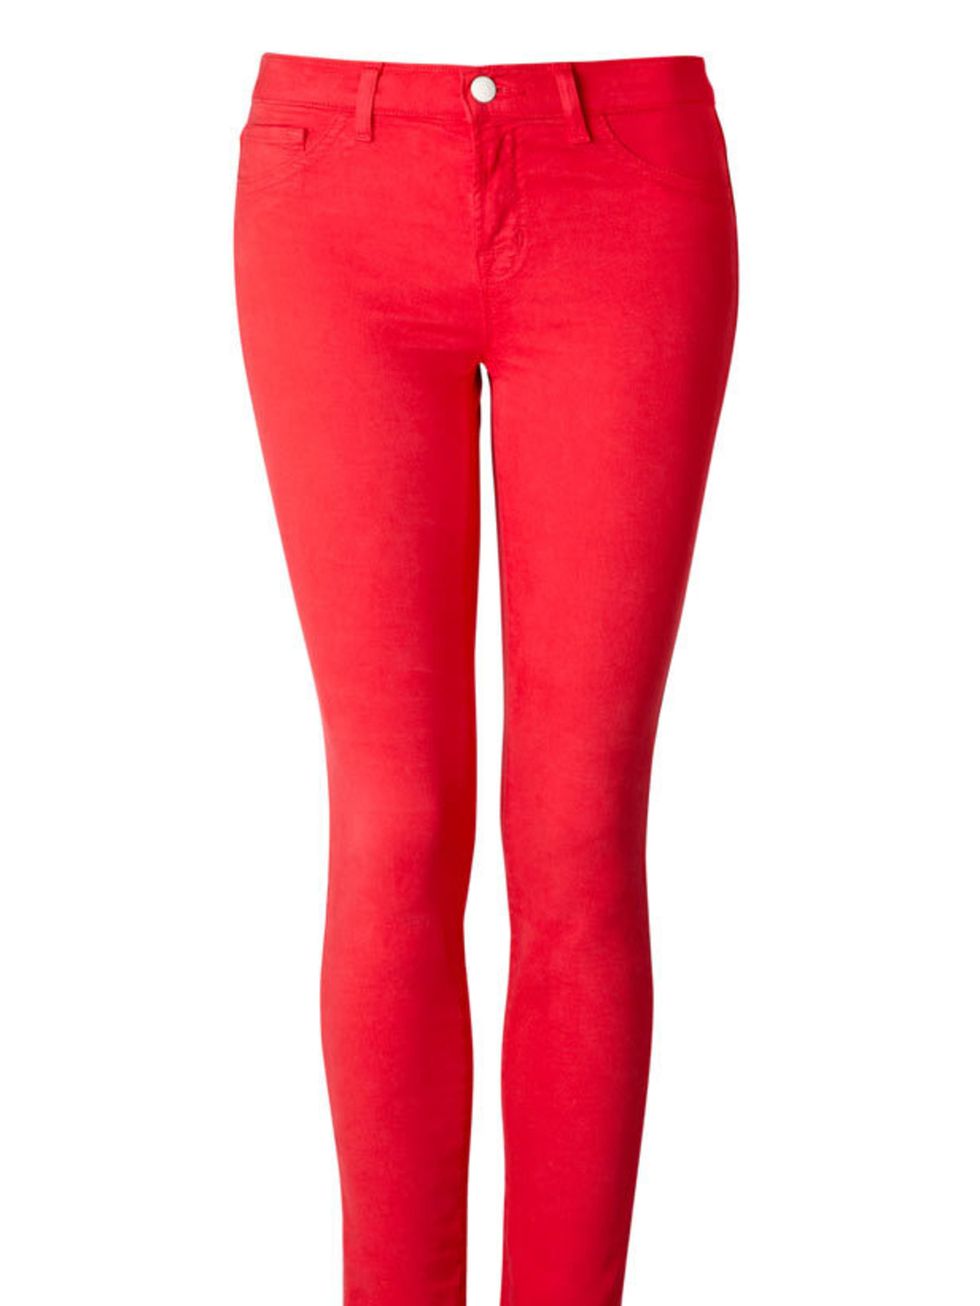 <p>J Brand coloured denim jeans, £205, at <a href="http://www.my-wardrobe.com/j-brand/bright-red-mid-rise-skinny-jean-855674">my-wardrobe.com</a></p>